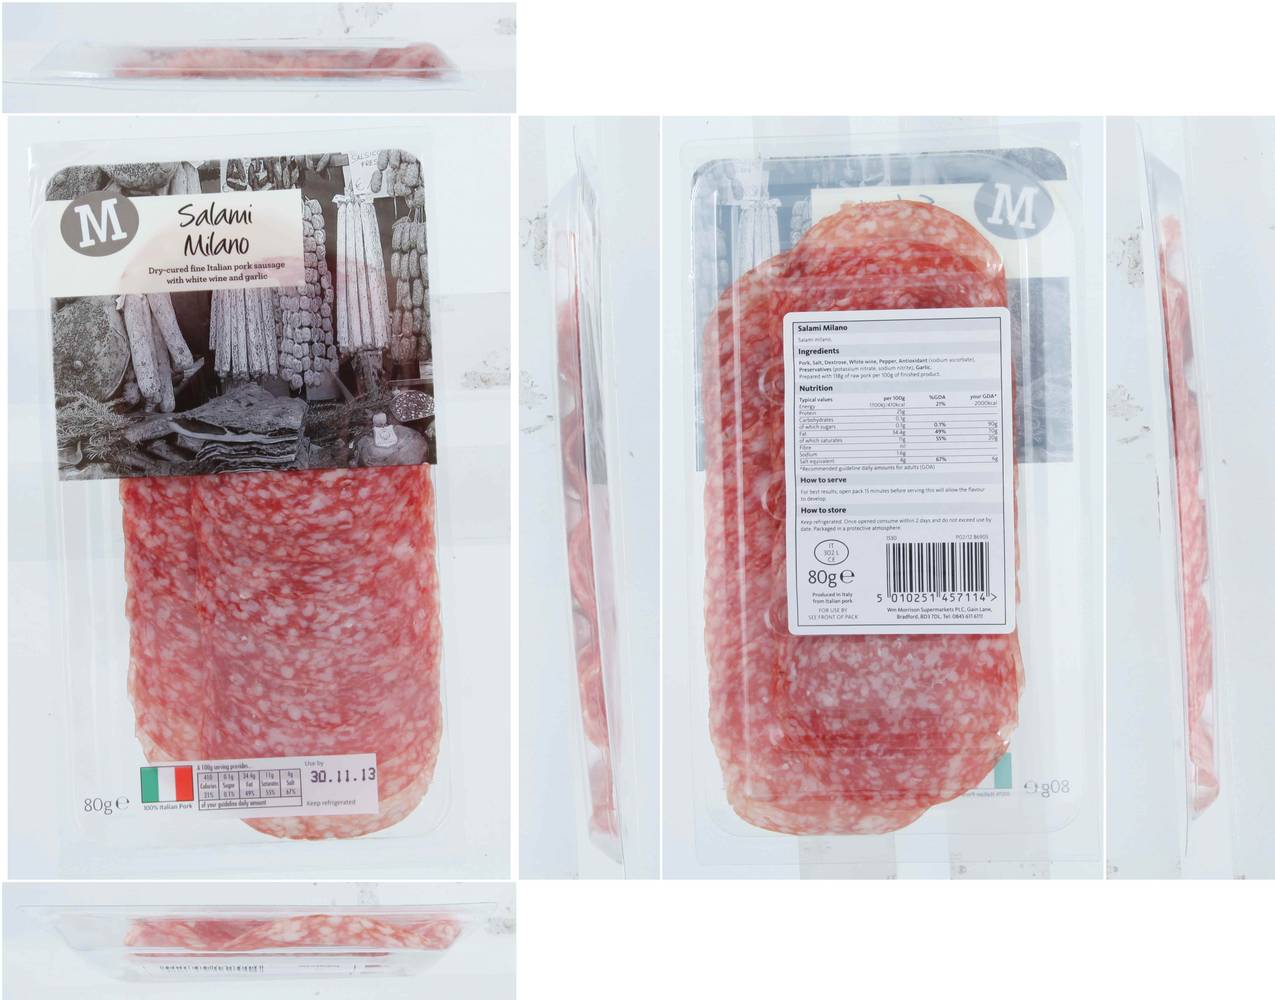 Morrisons Italian Milano Salami Slices